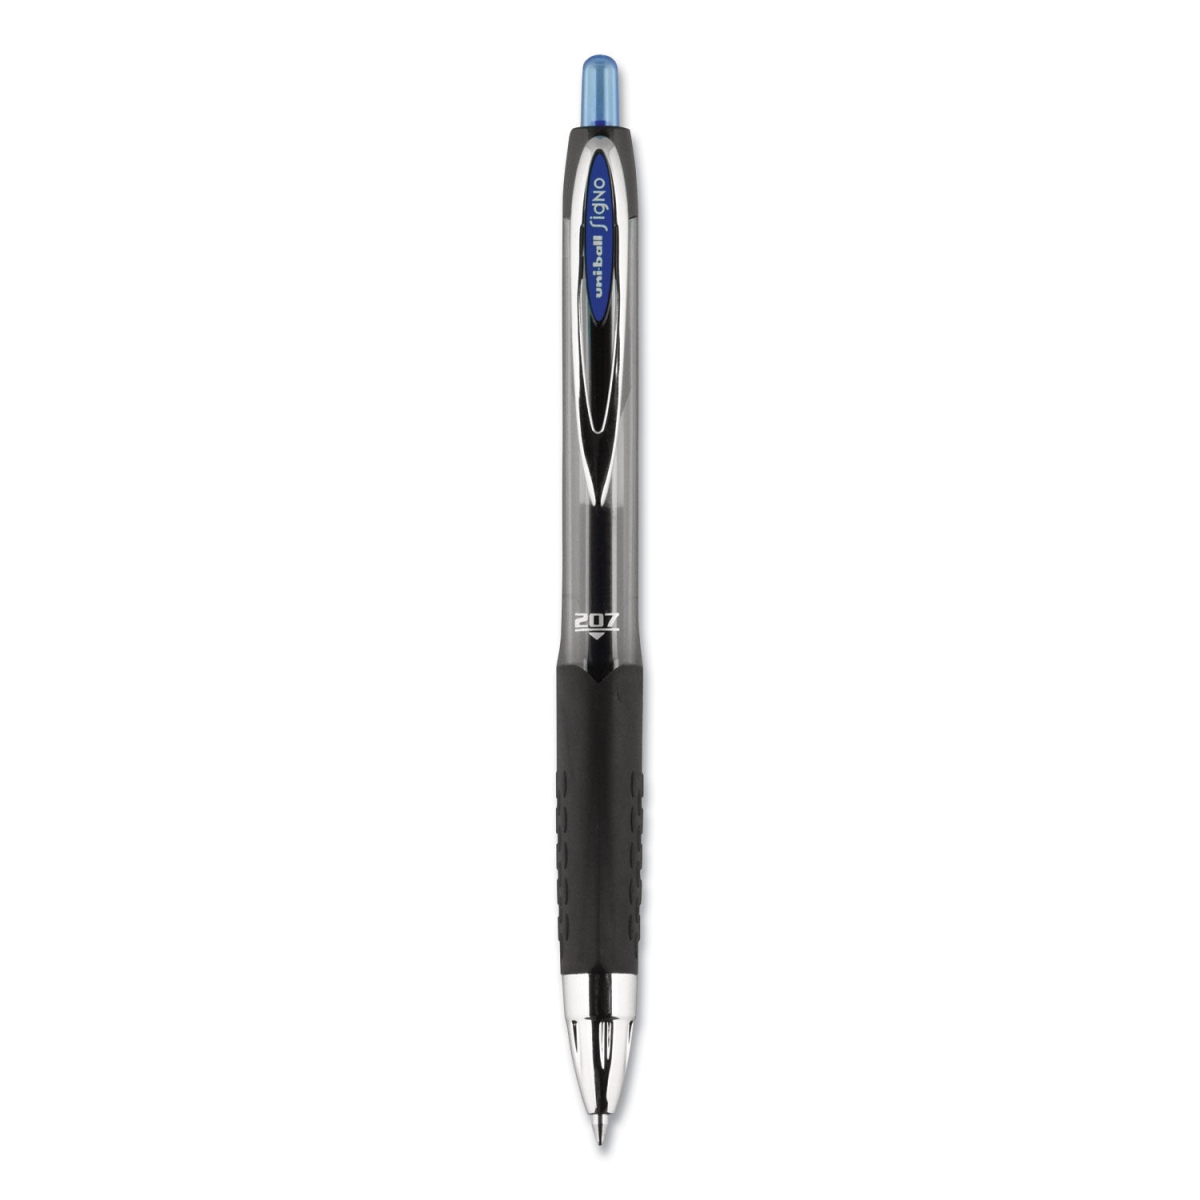 uni-ball UBC33951 0.7 mm 207 Retractable Gel Pen, Blue - Pack of 12